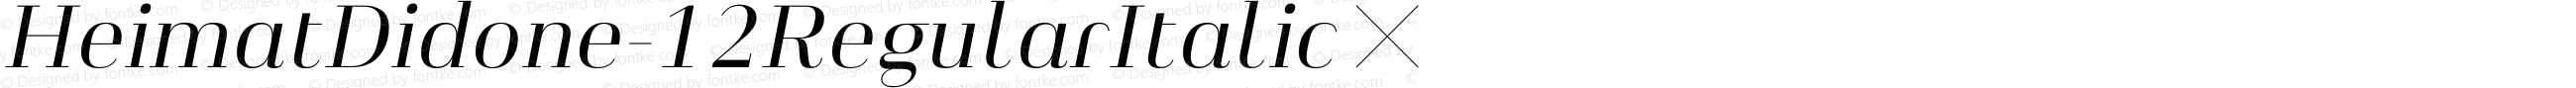 ☞Heimat Didone 12 Regular Italic